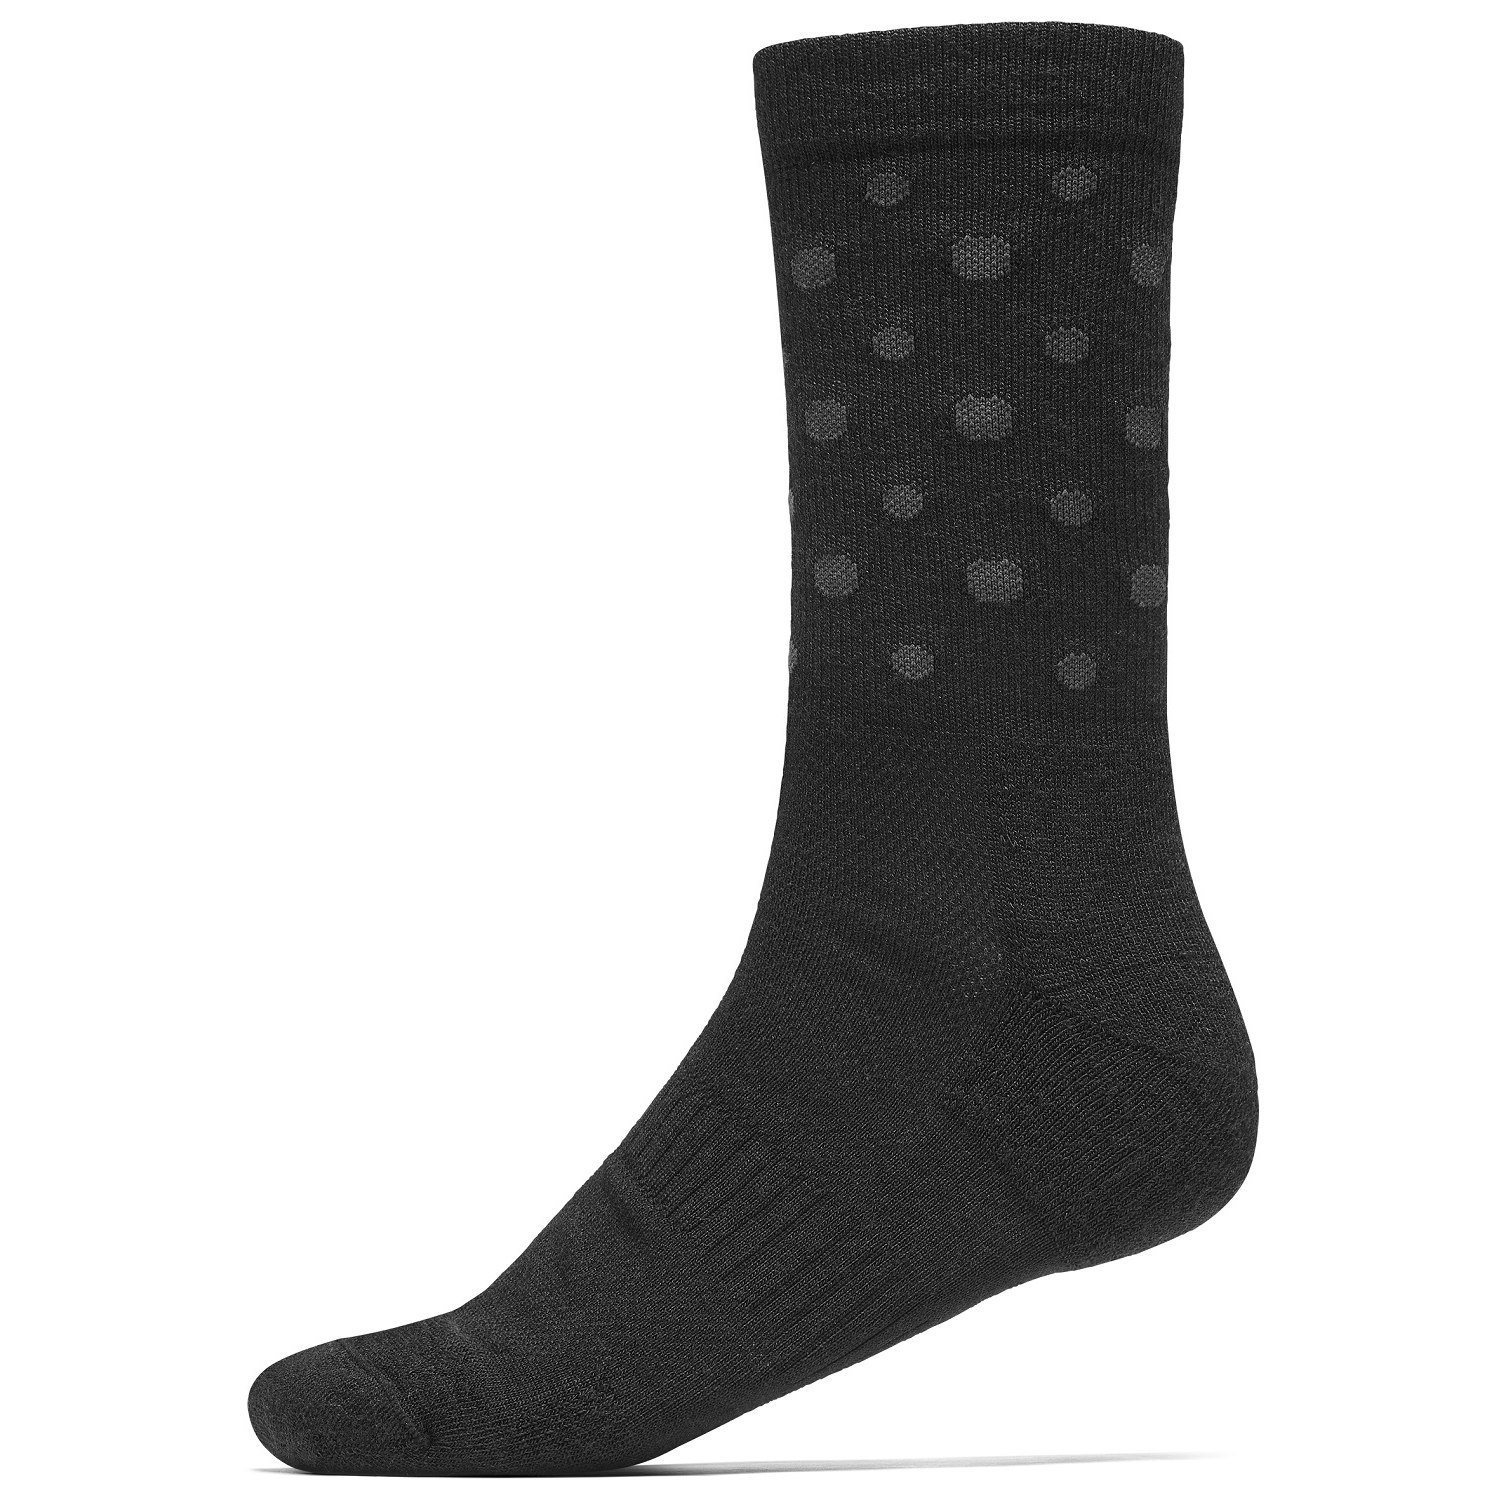 Picture of Icebug Active Merino Socks - spots black/grey